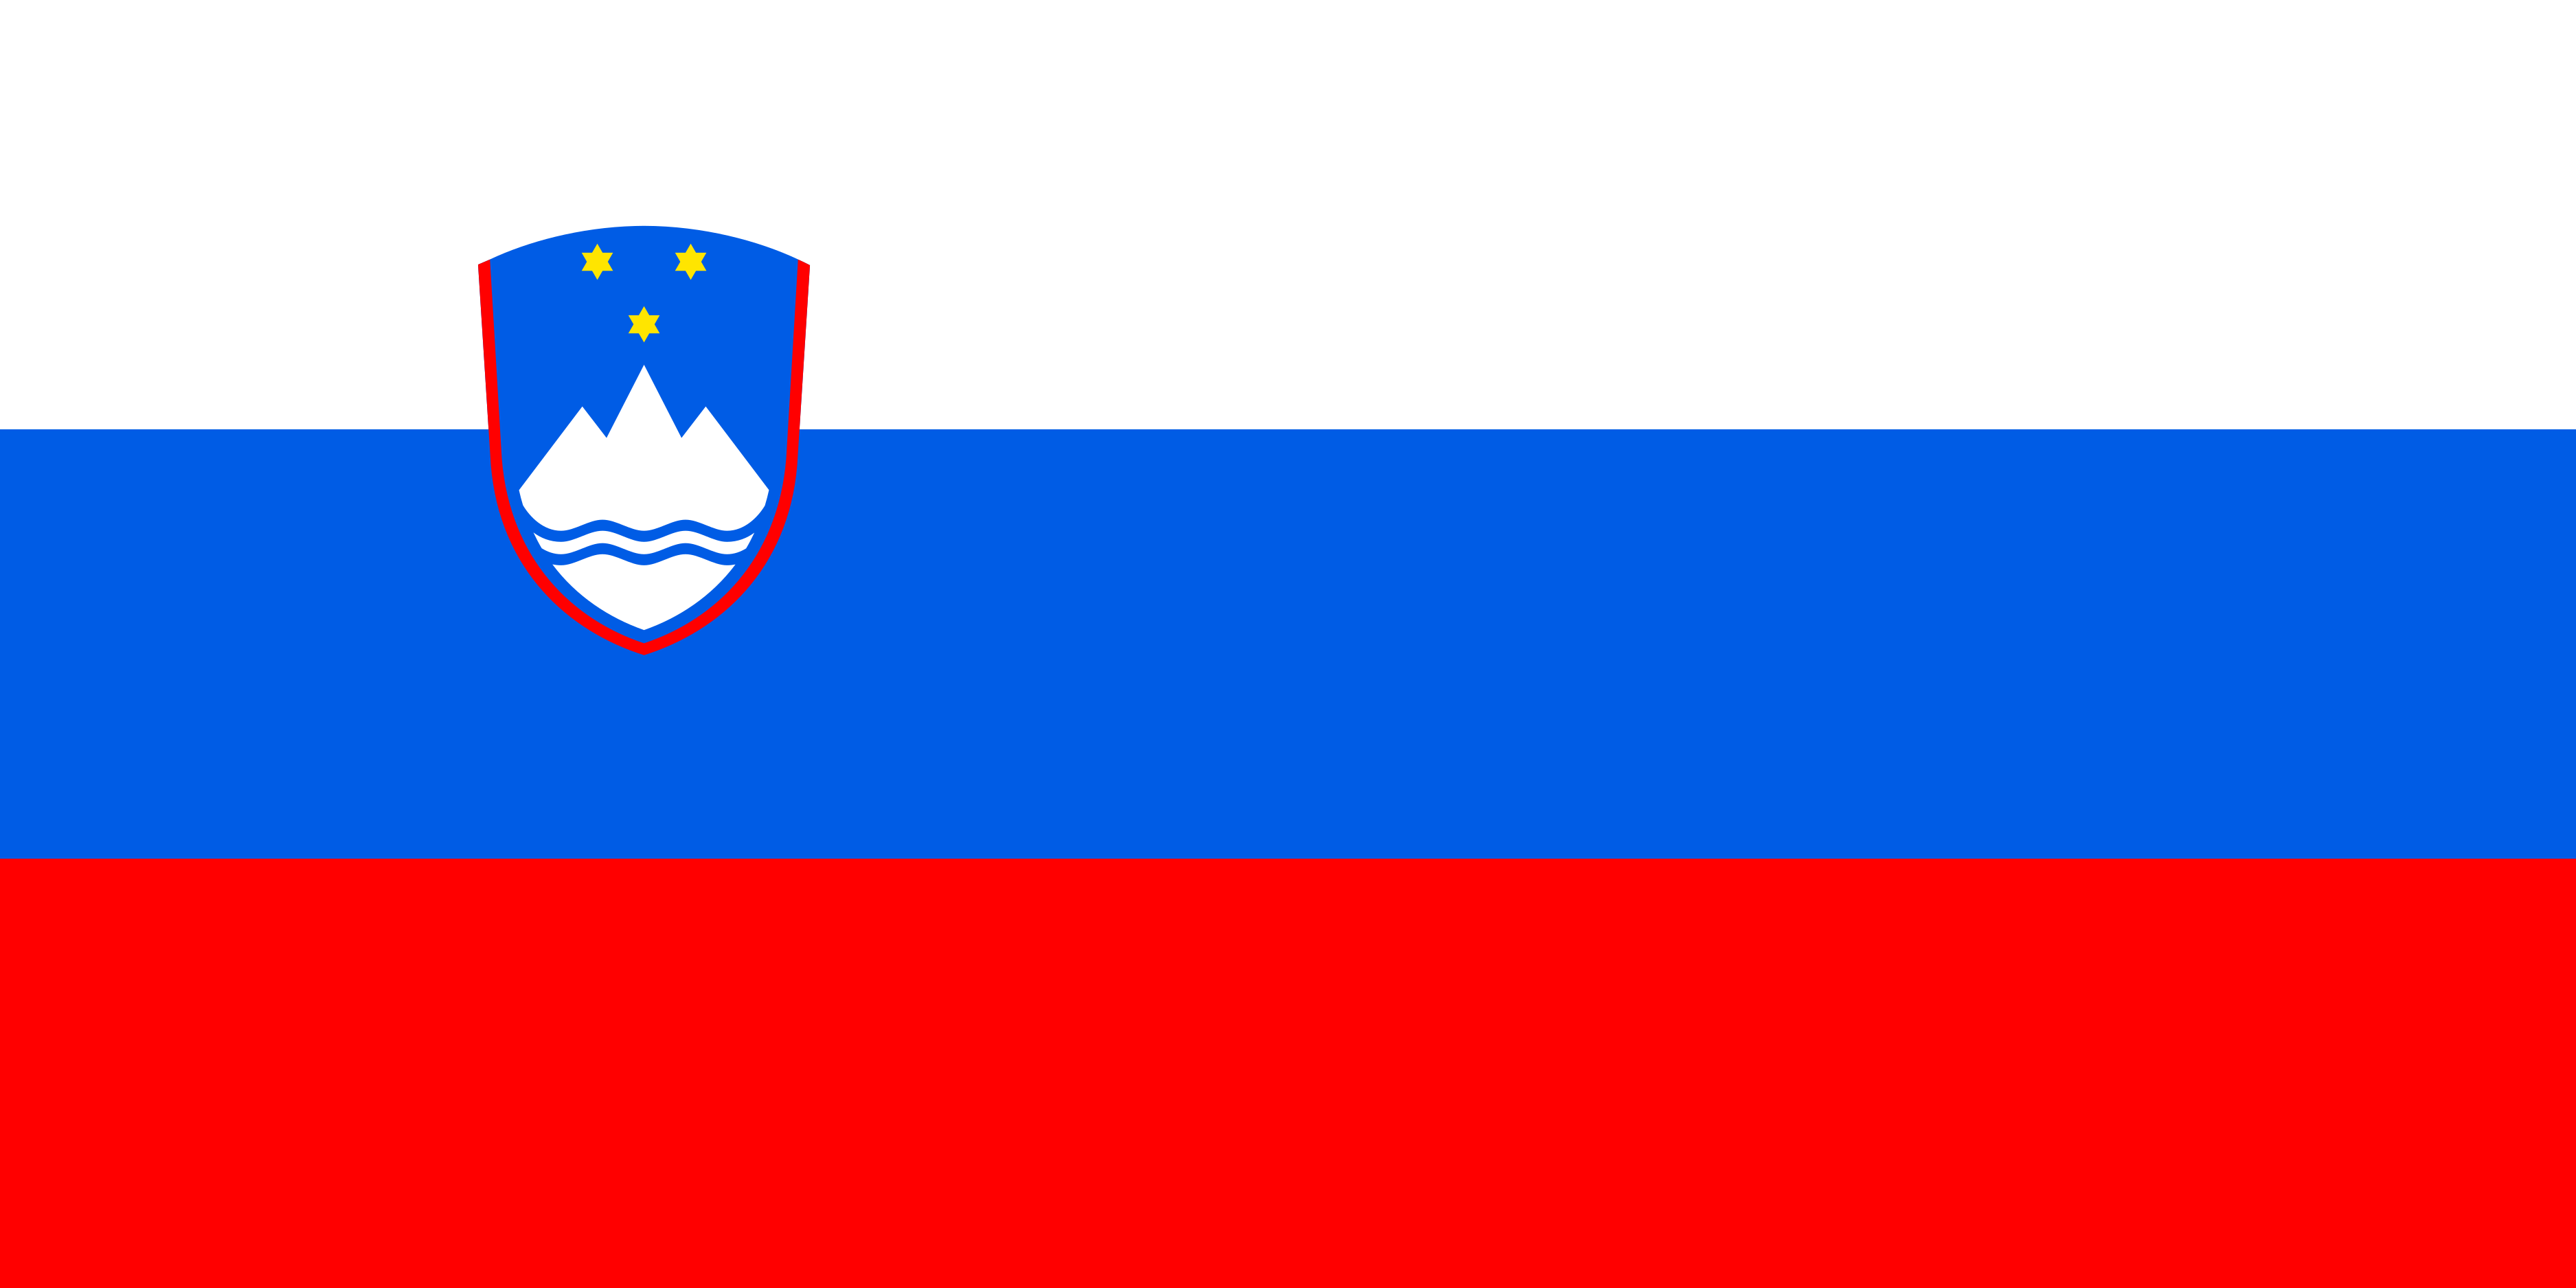 Slovenia Flag Image - Free Download